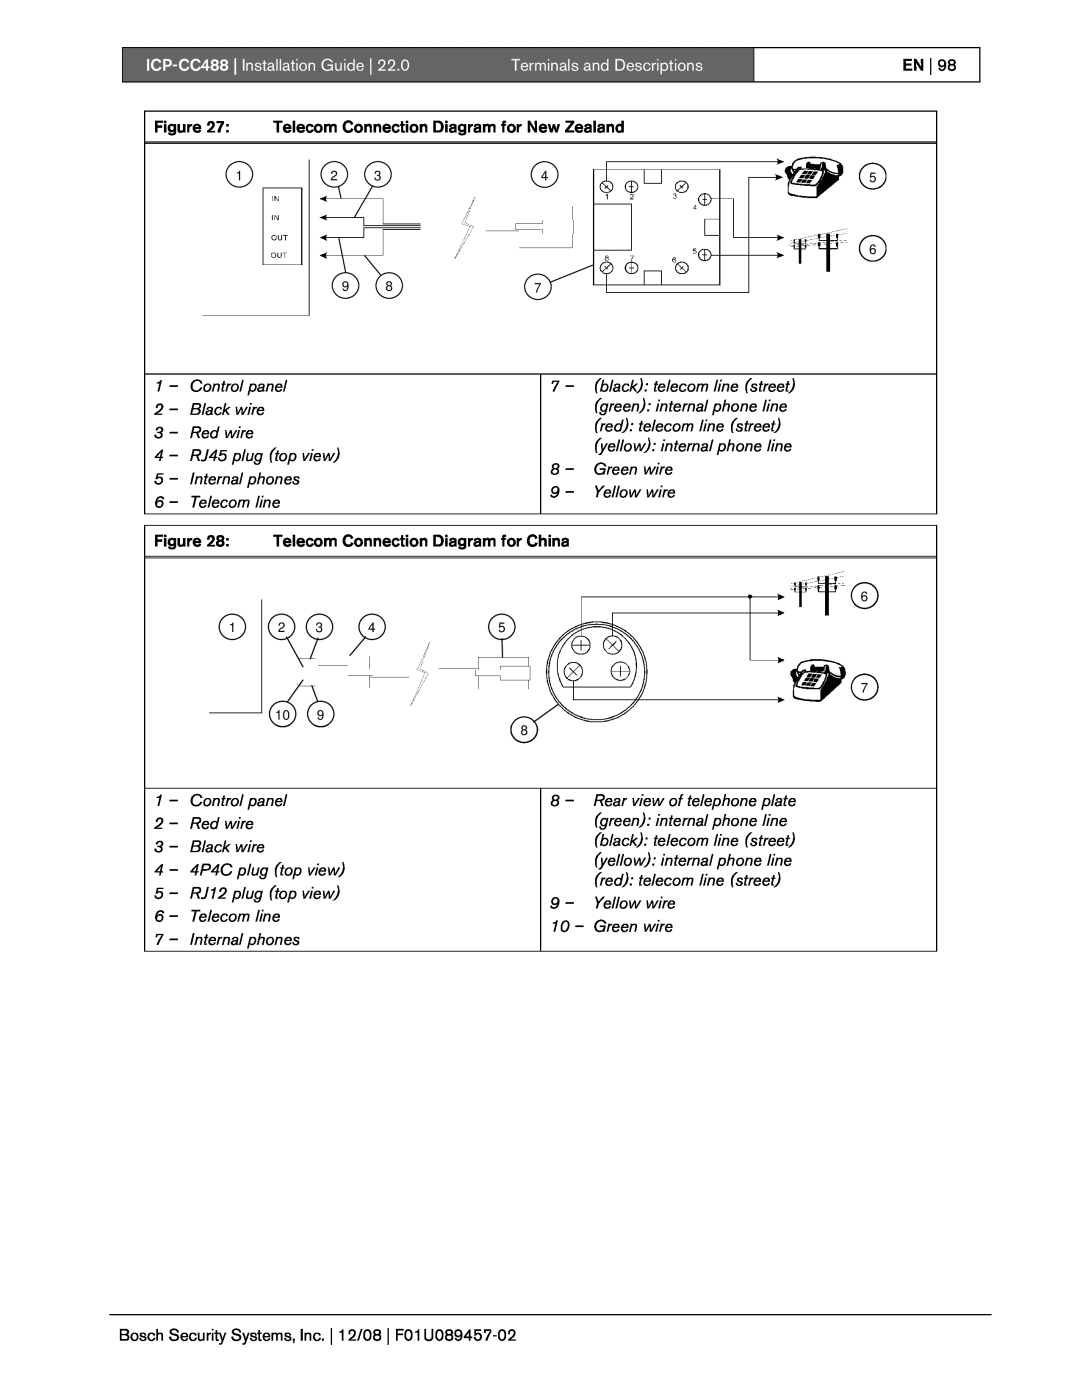 Bosch Appliances ICP-CC488| Installation Guide, Terminals and Descriptions, En, Telecom Connection Diagram for China 